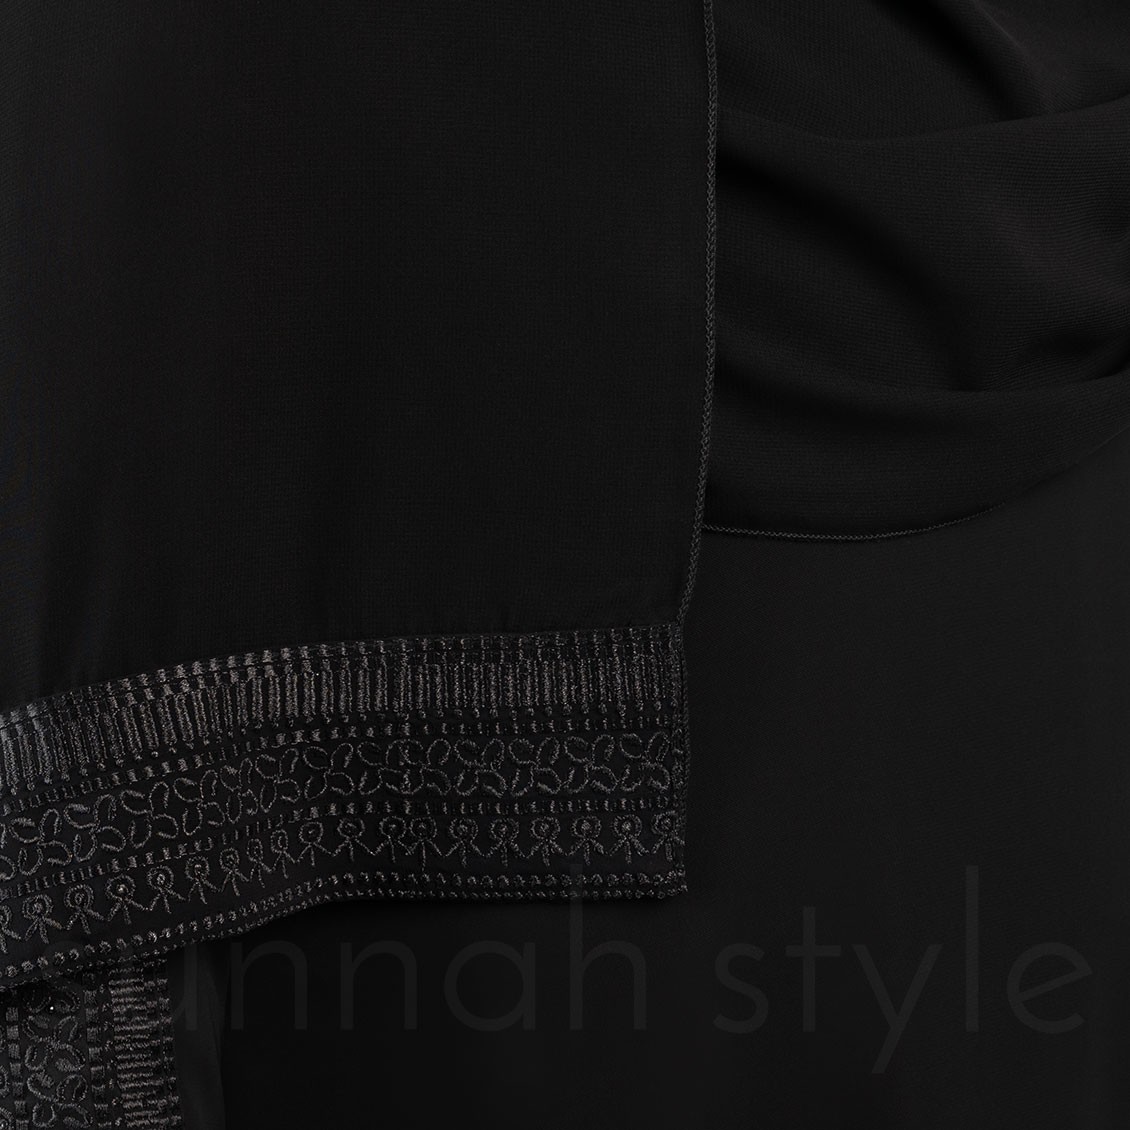 Sunnah Style Empress Shayla Black Embroidered Hijab Large